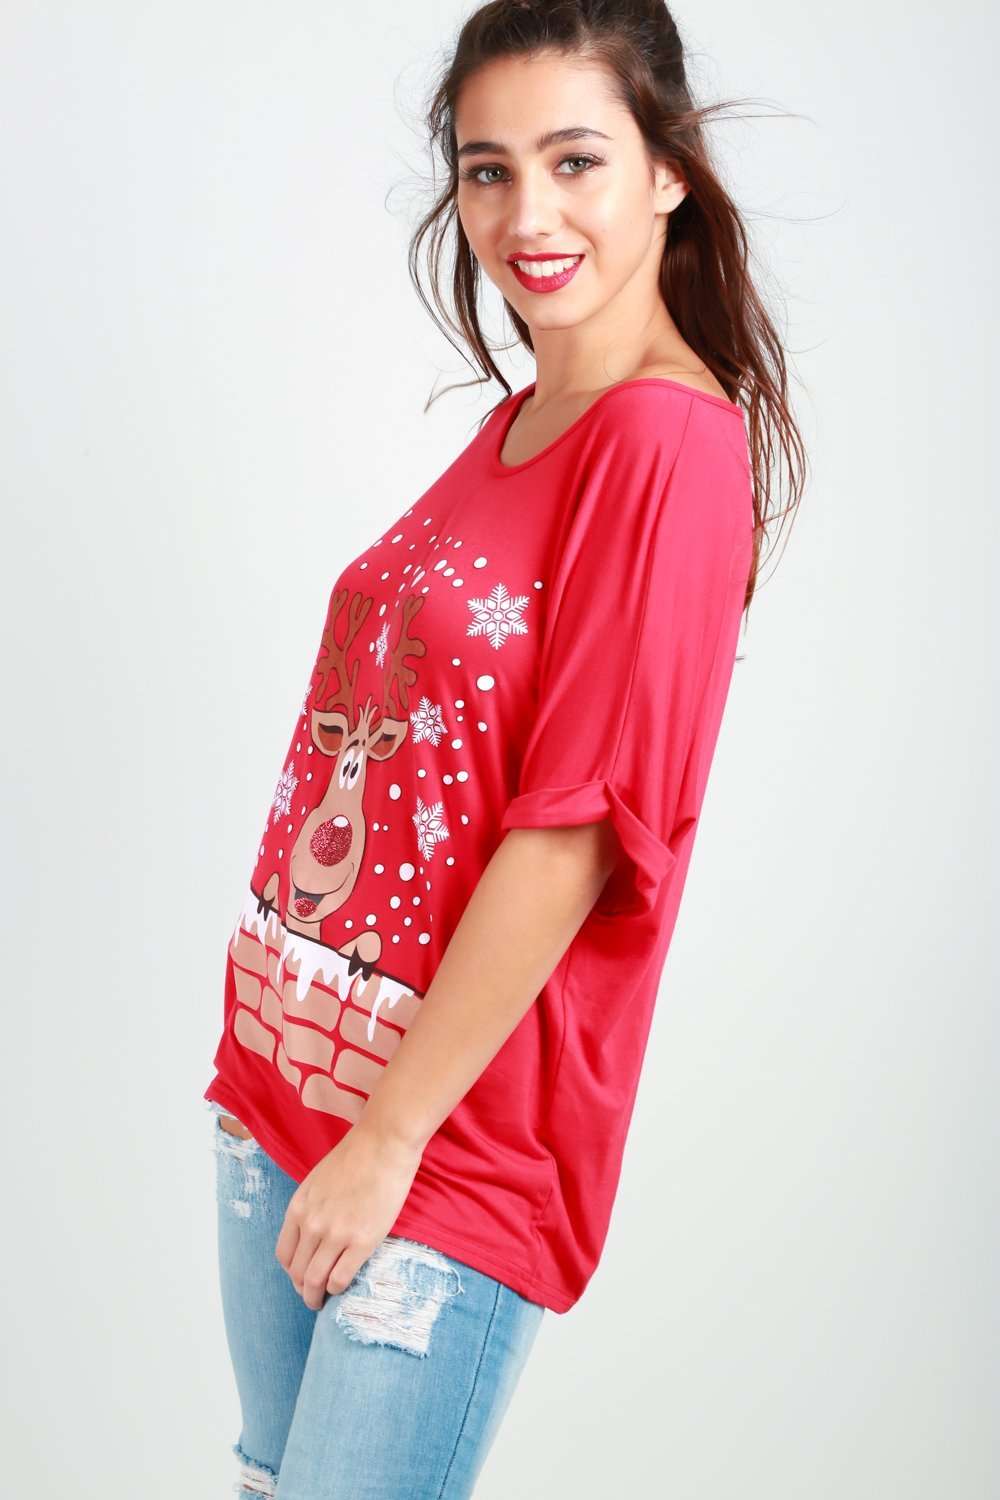 Reindeer Print Christmas Tshirt - bejealous-com